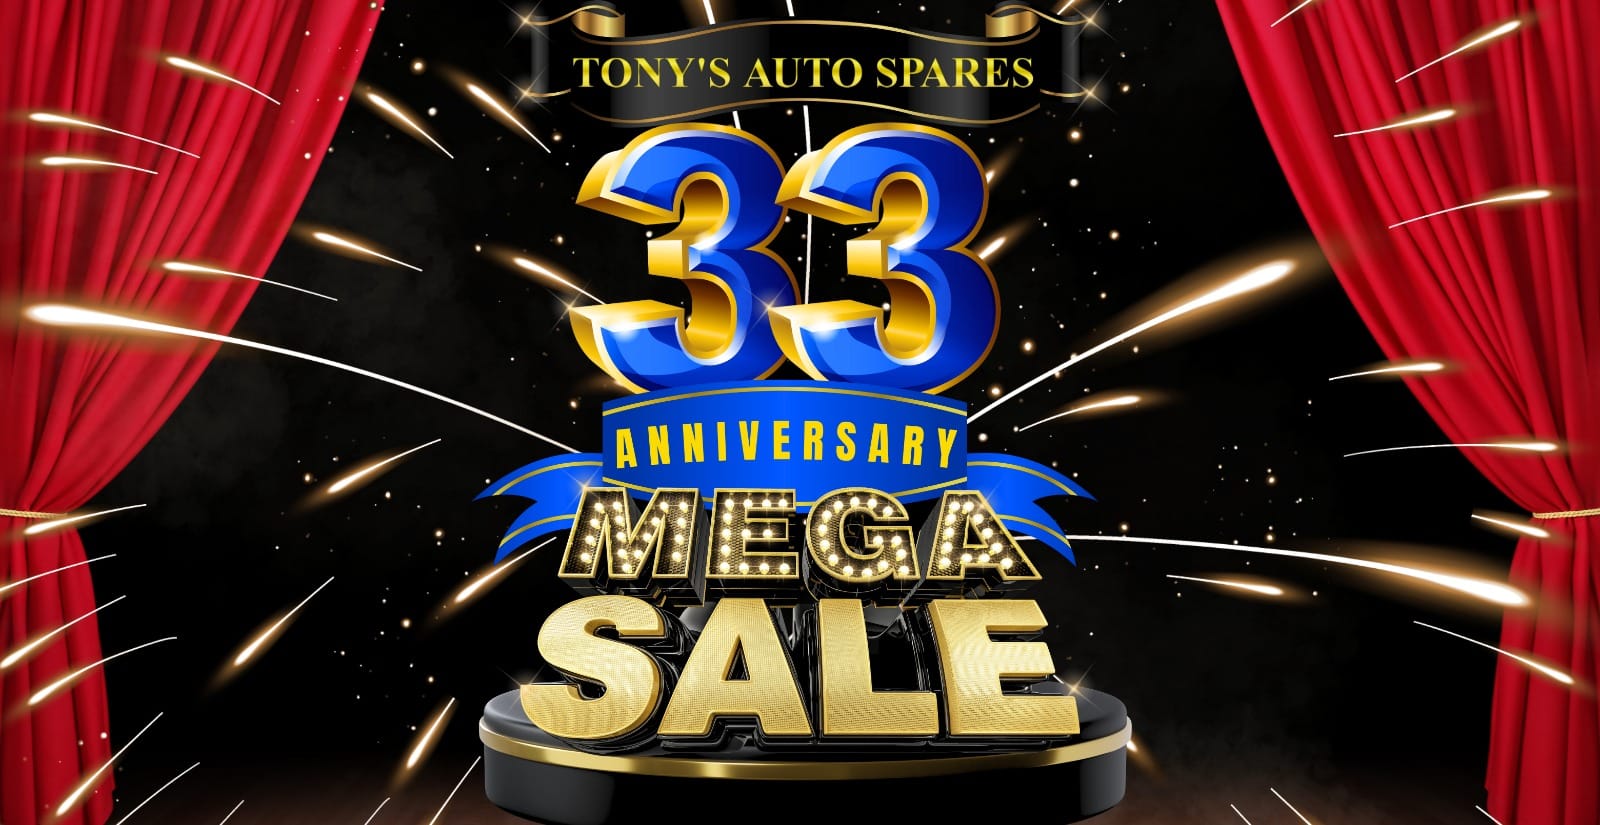 Member Achievement || Tony Auto Spares celebrates 33 years